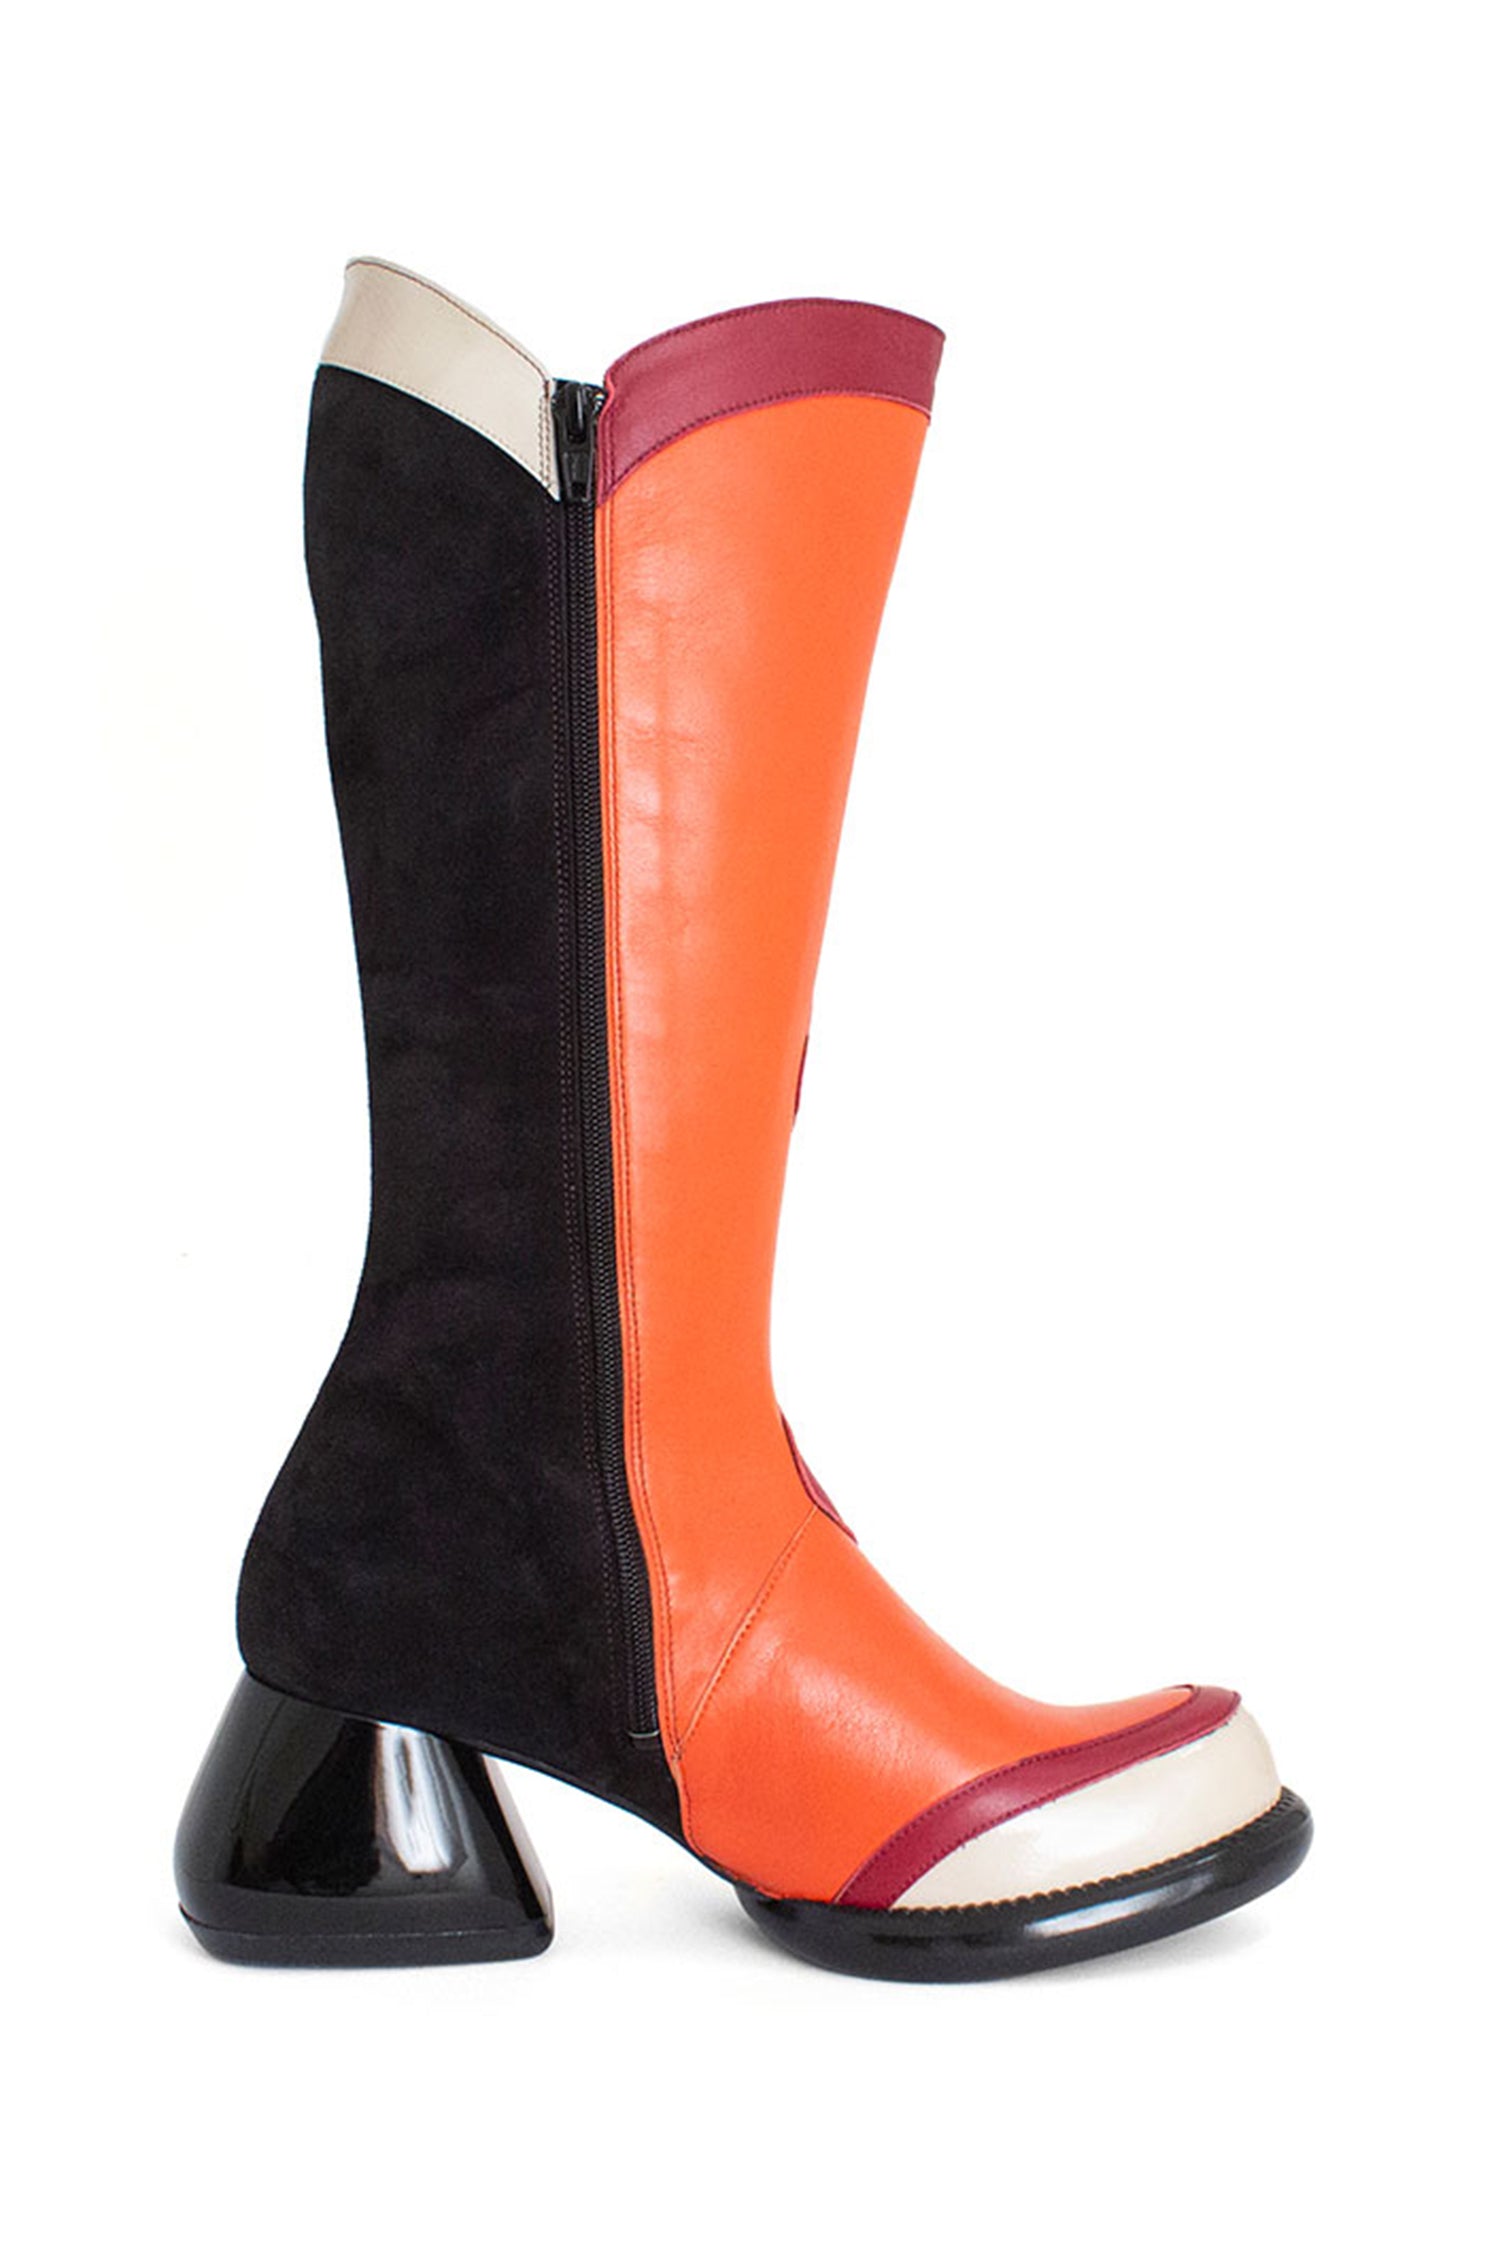 Anna Sui x John Fluevog Warhol Boot orange, back, sole, and pyramidal heel is black